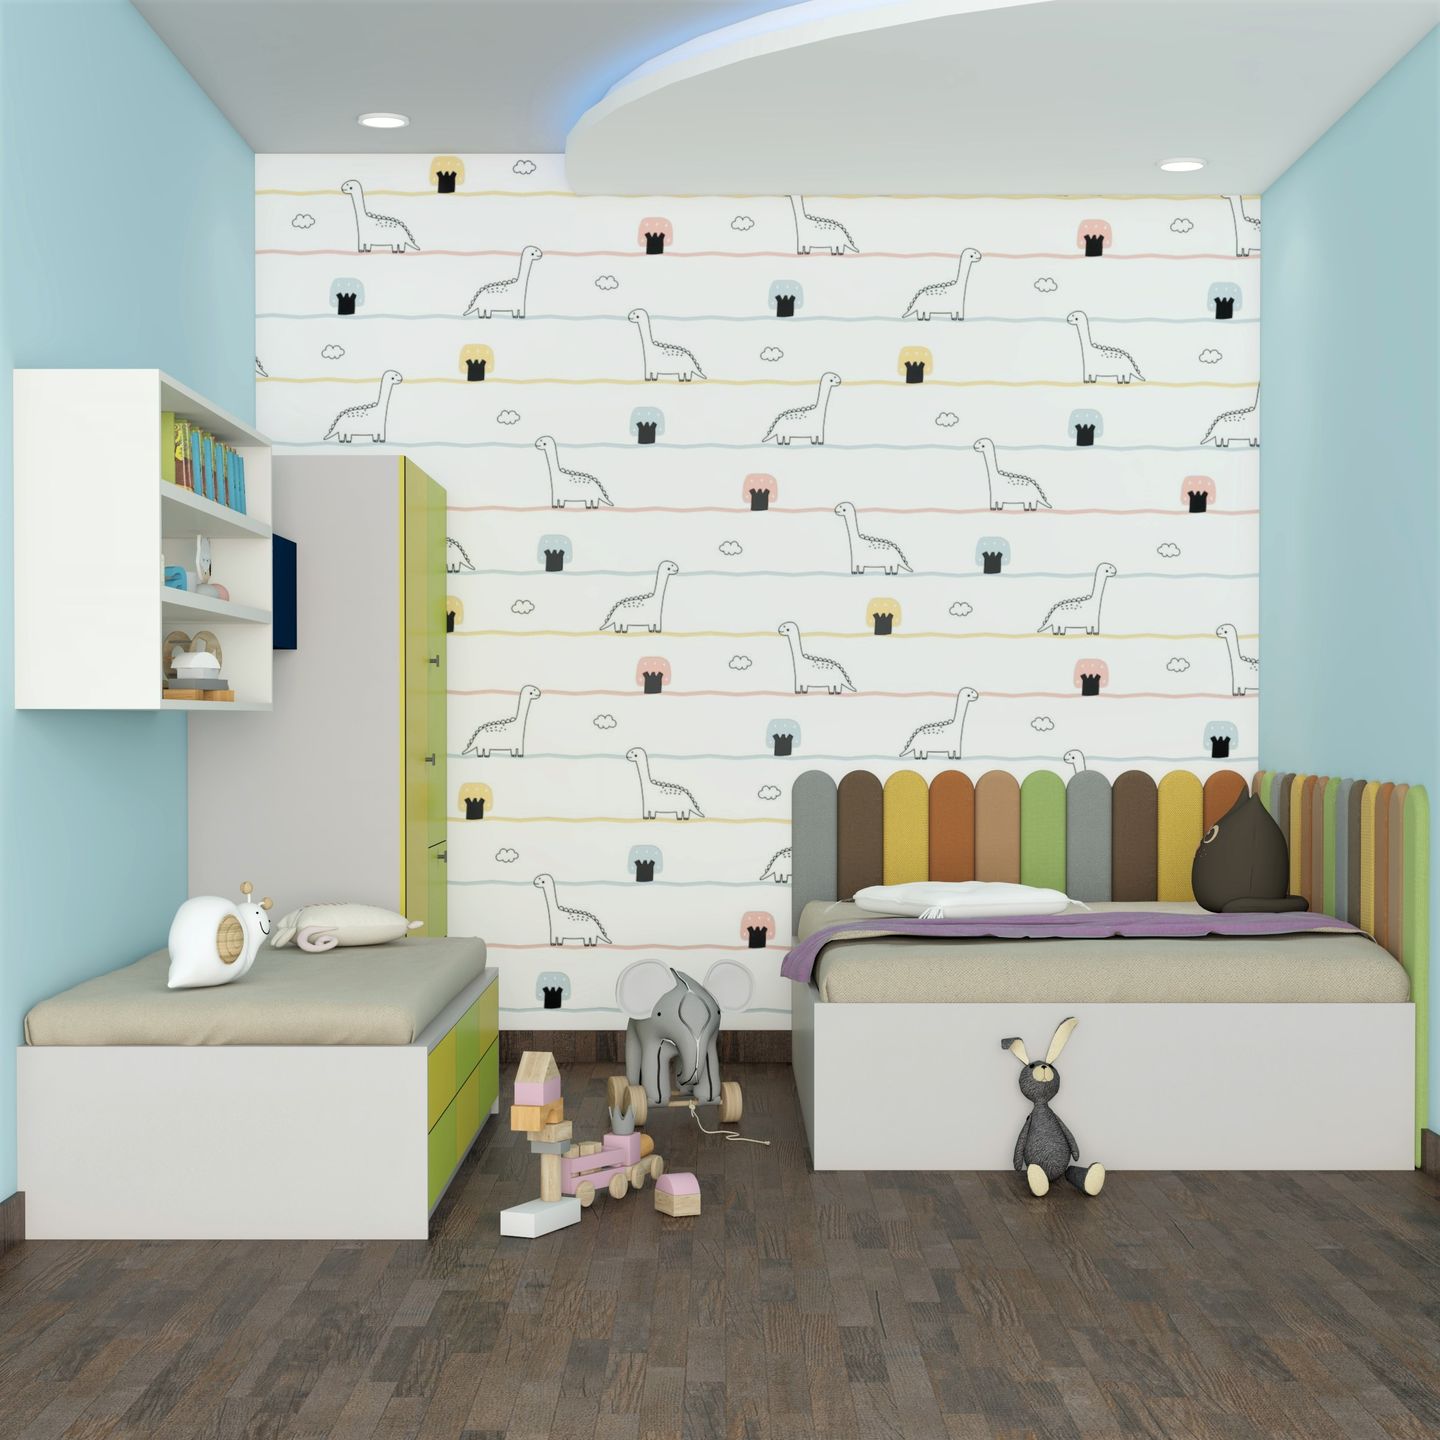 Kid's Bedroom Design With Dinosaur Wallpaper - Livspace